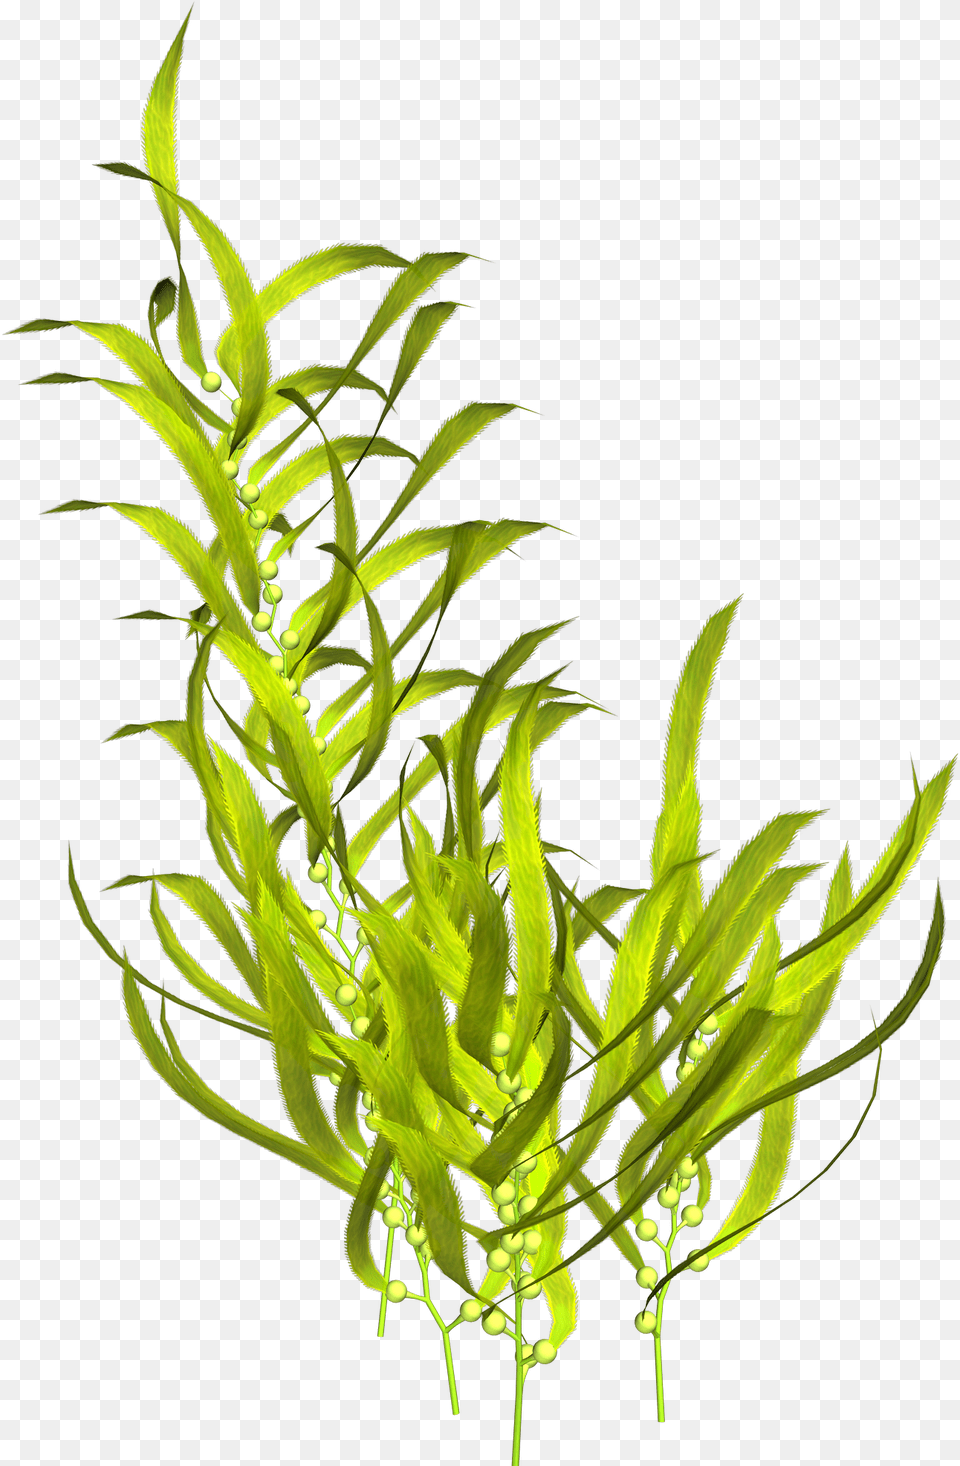 Seaweed Aquatic Plants Clip Art Seaweed, Plant, Grass, Water, Leaf Png Image